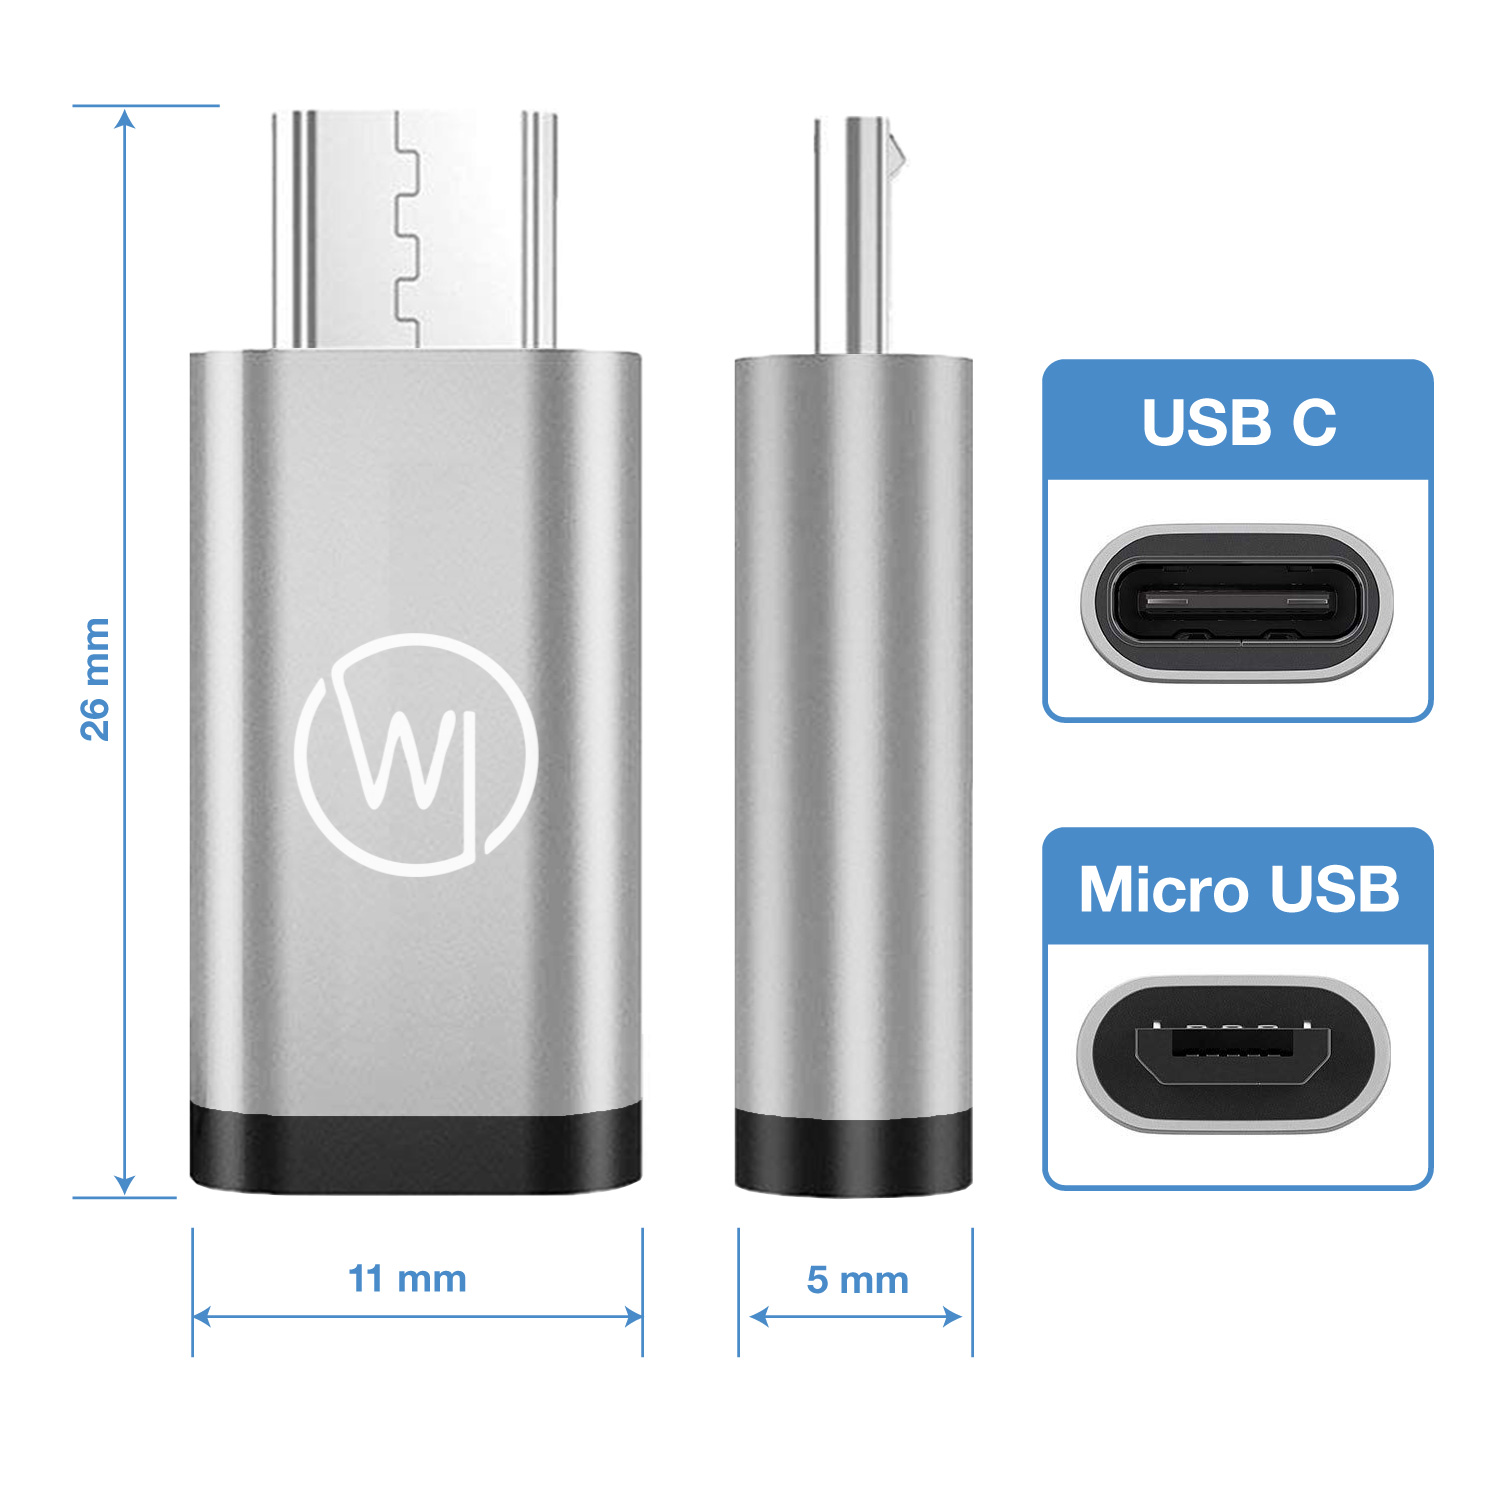 OTG CHILI EnVizion WICKED auf für Alu-Adapter nur USB-C Datentransfer USB-C Handy MicroUSB für 360 Kamera, Huawei Adapter